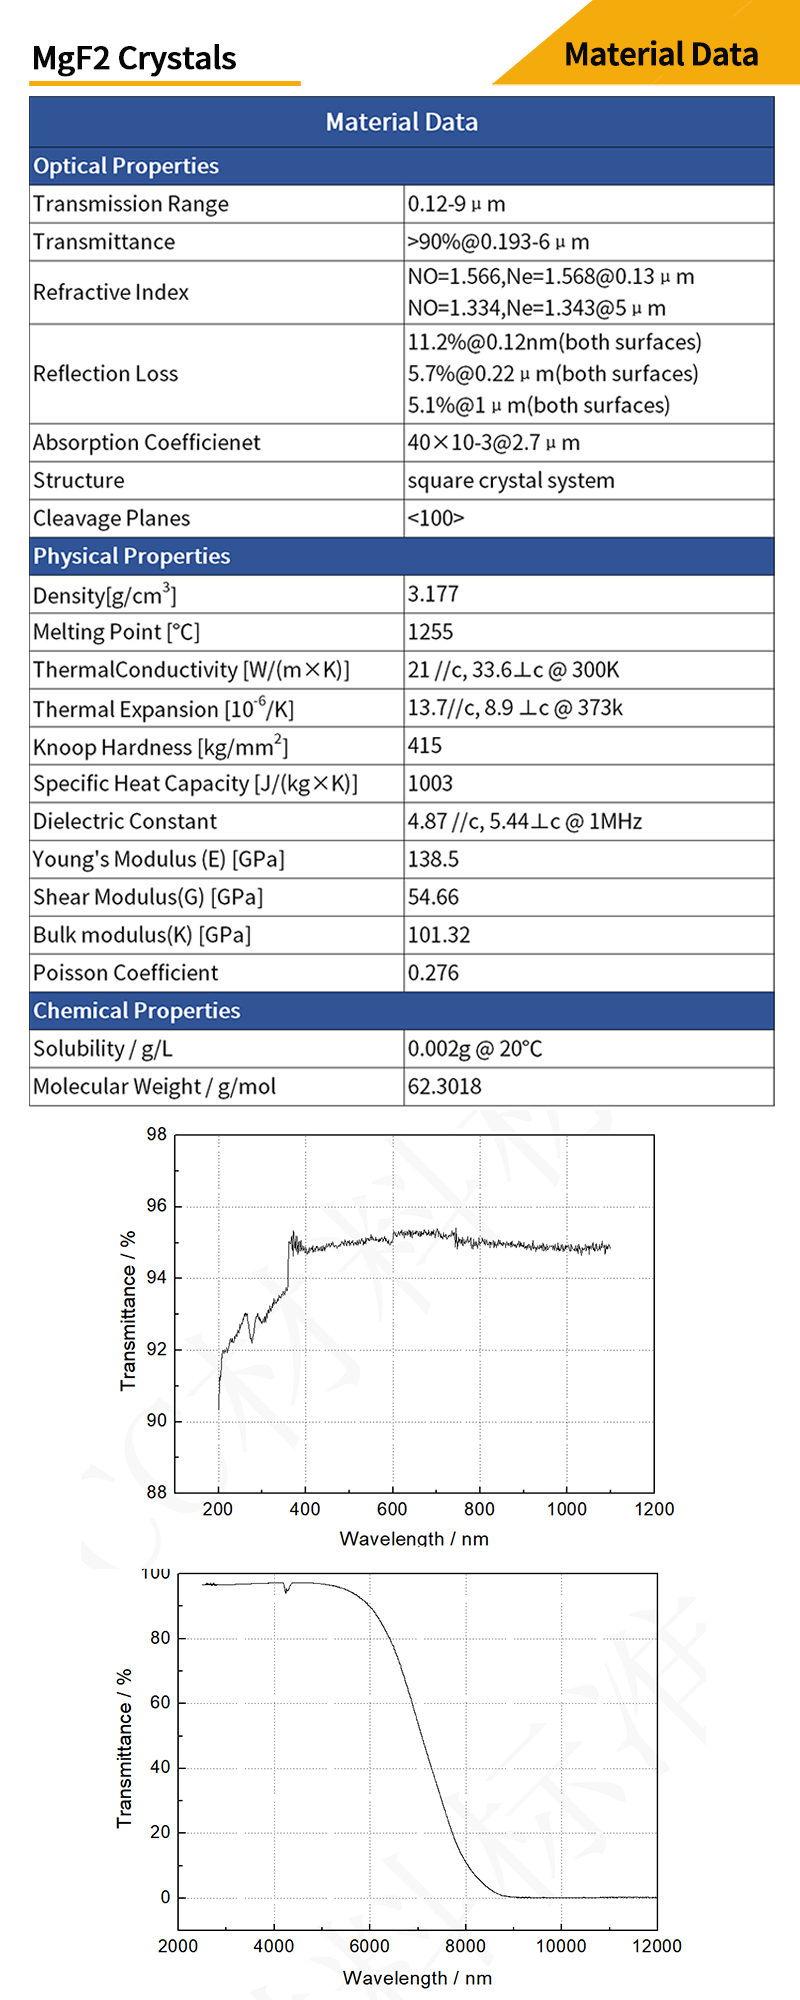 Magnesium Fluoride meniscus lenses material data and transmittance curves